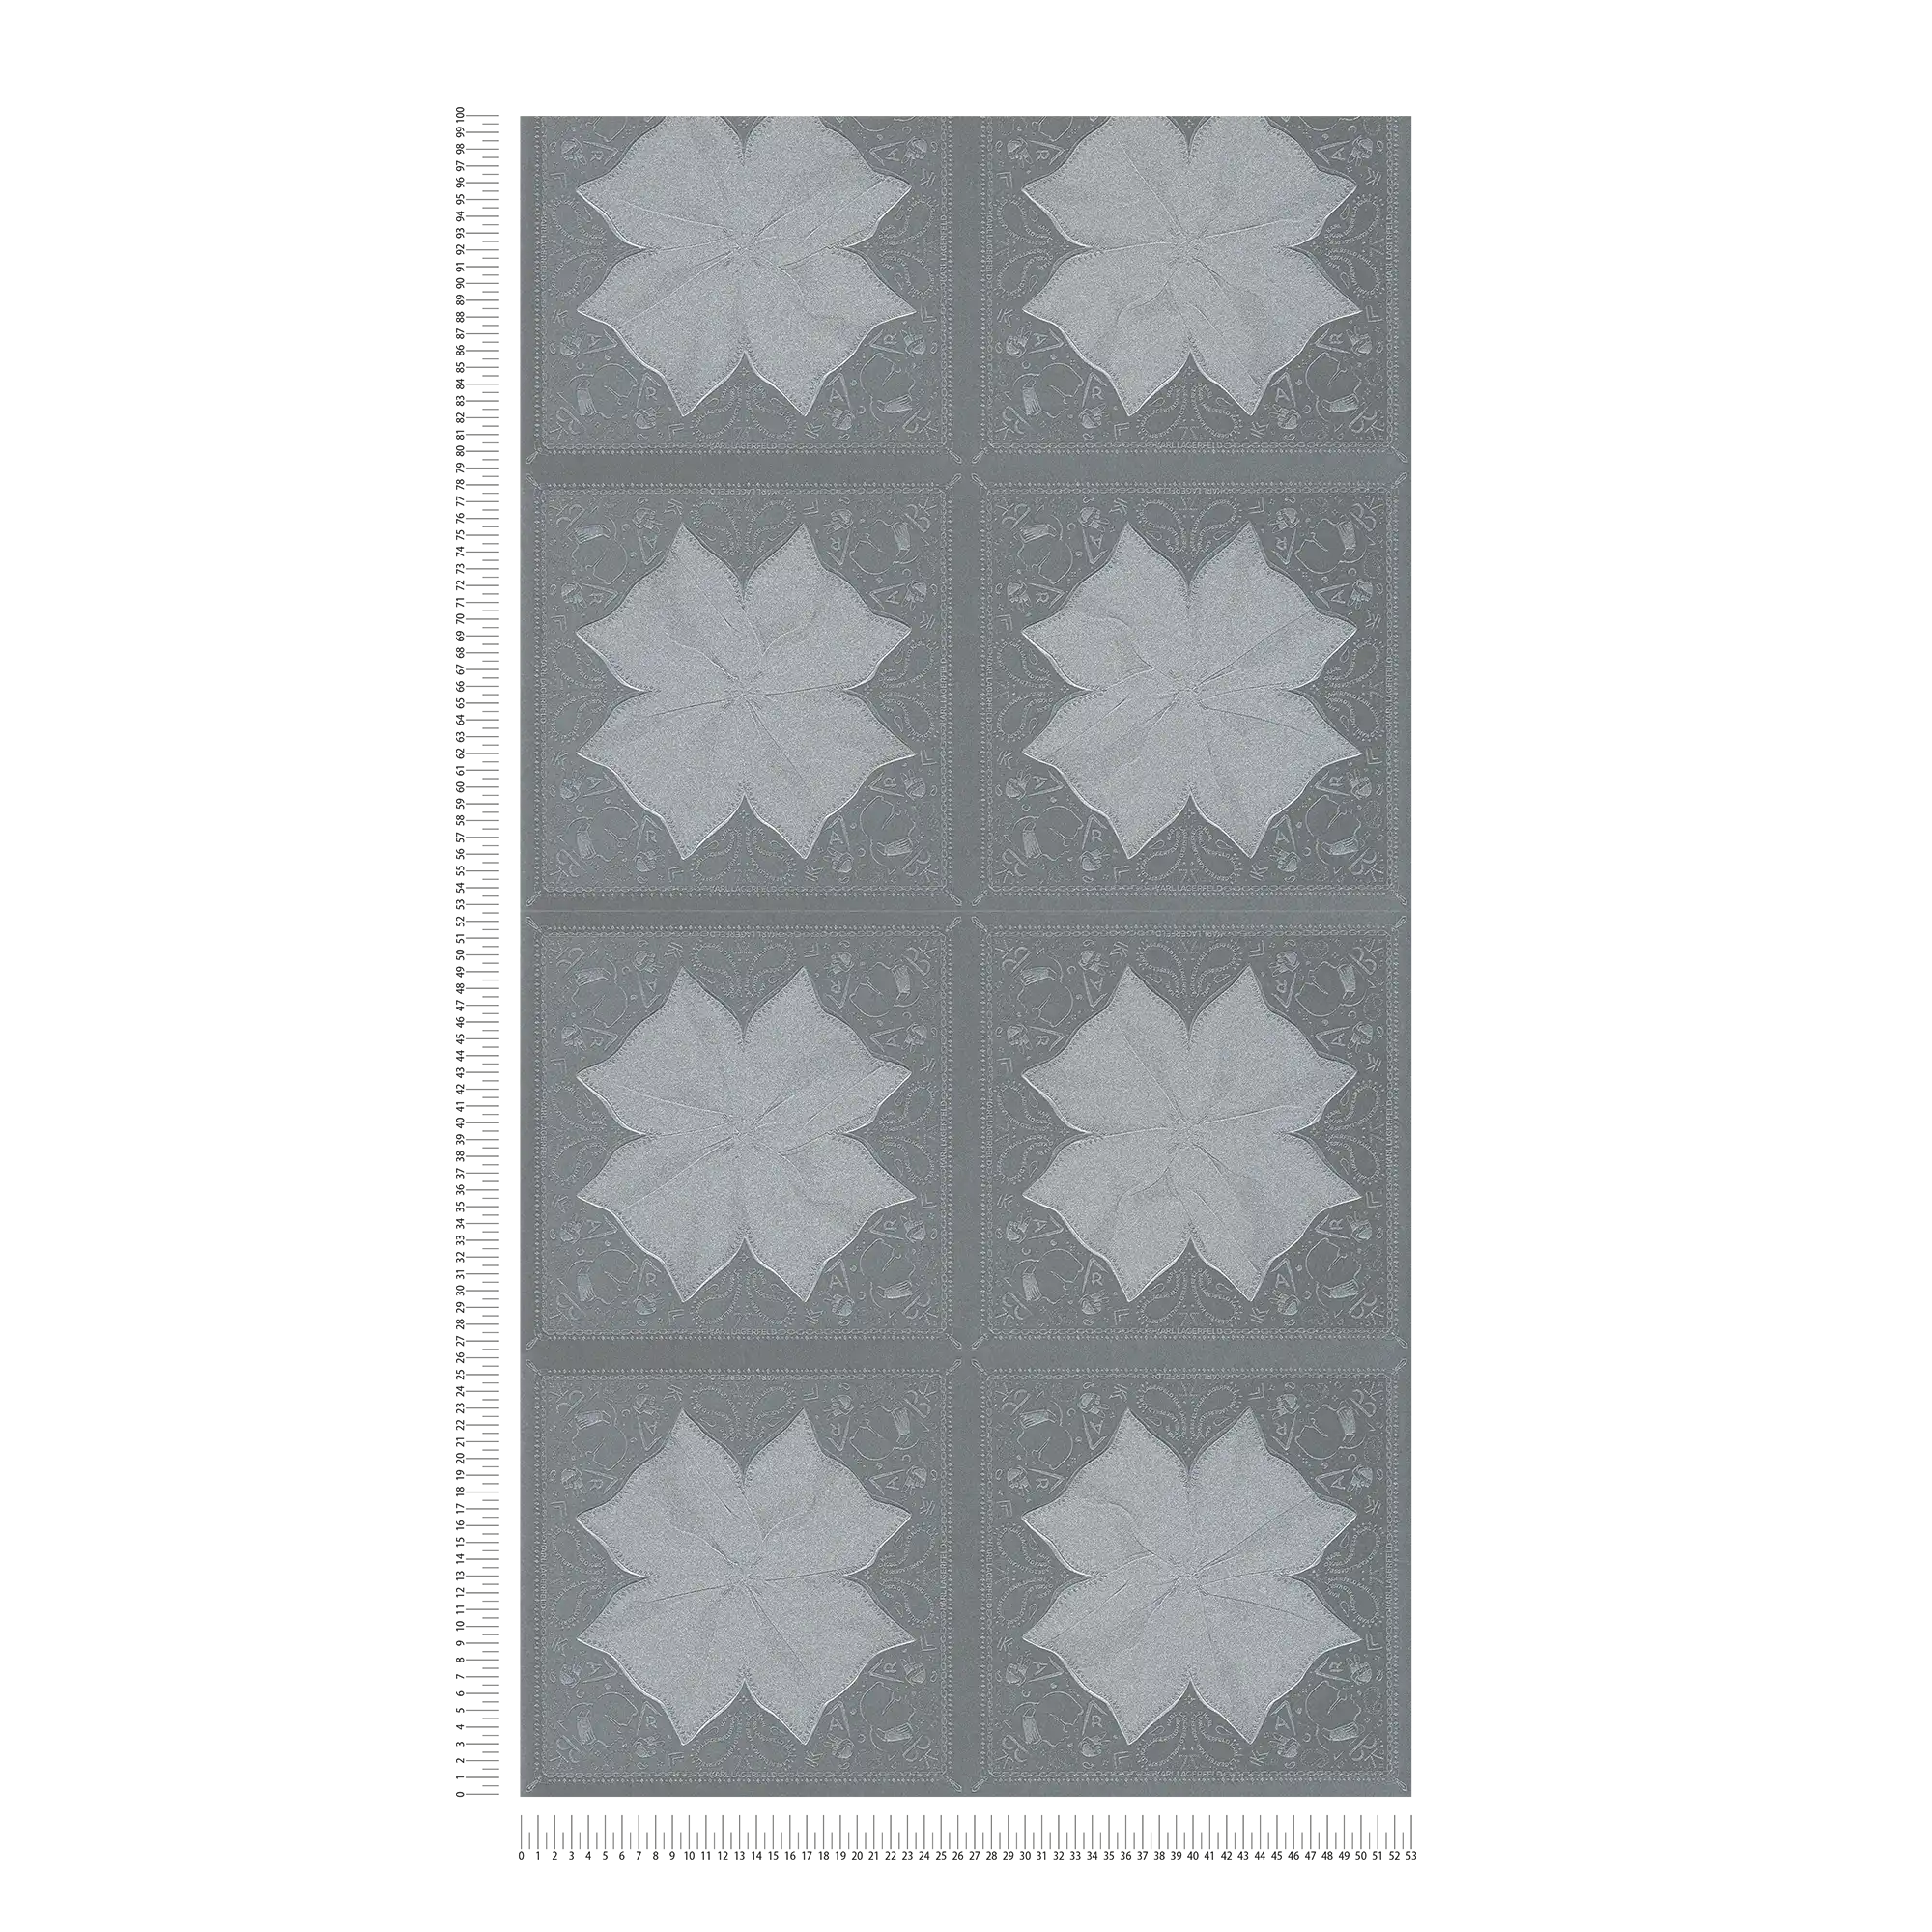             Wallpaper Karl LAGERFELD tie pattern - grey, metallic
        